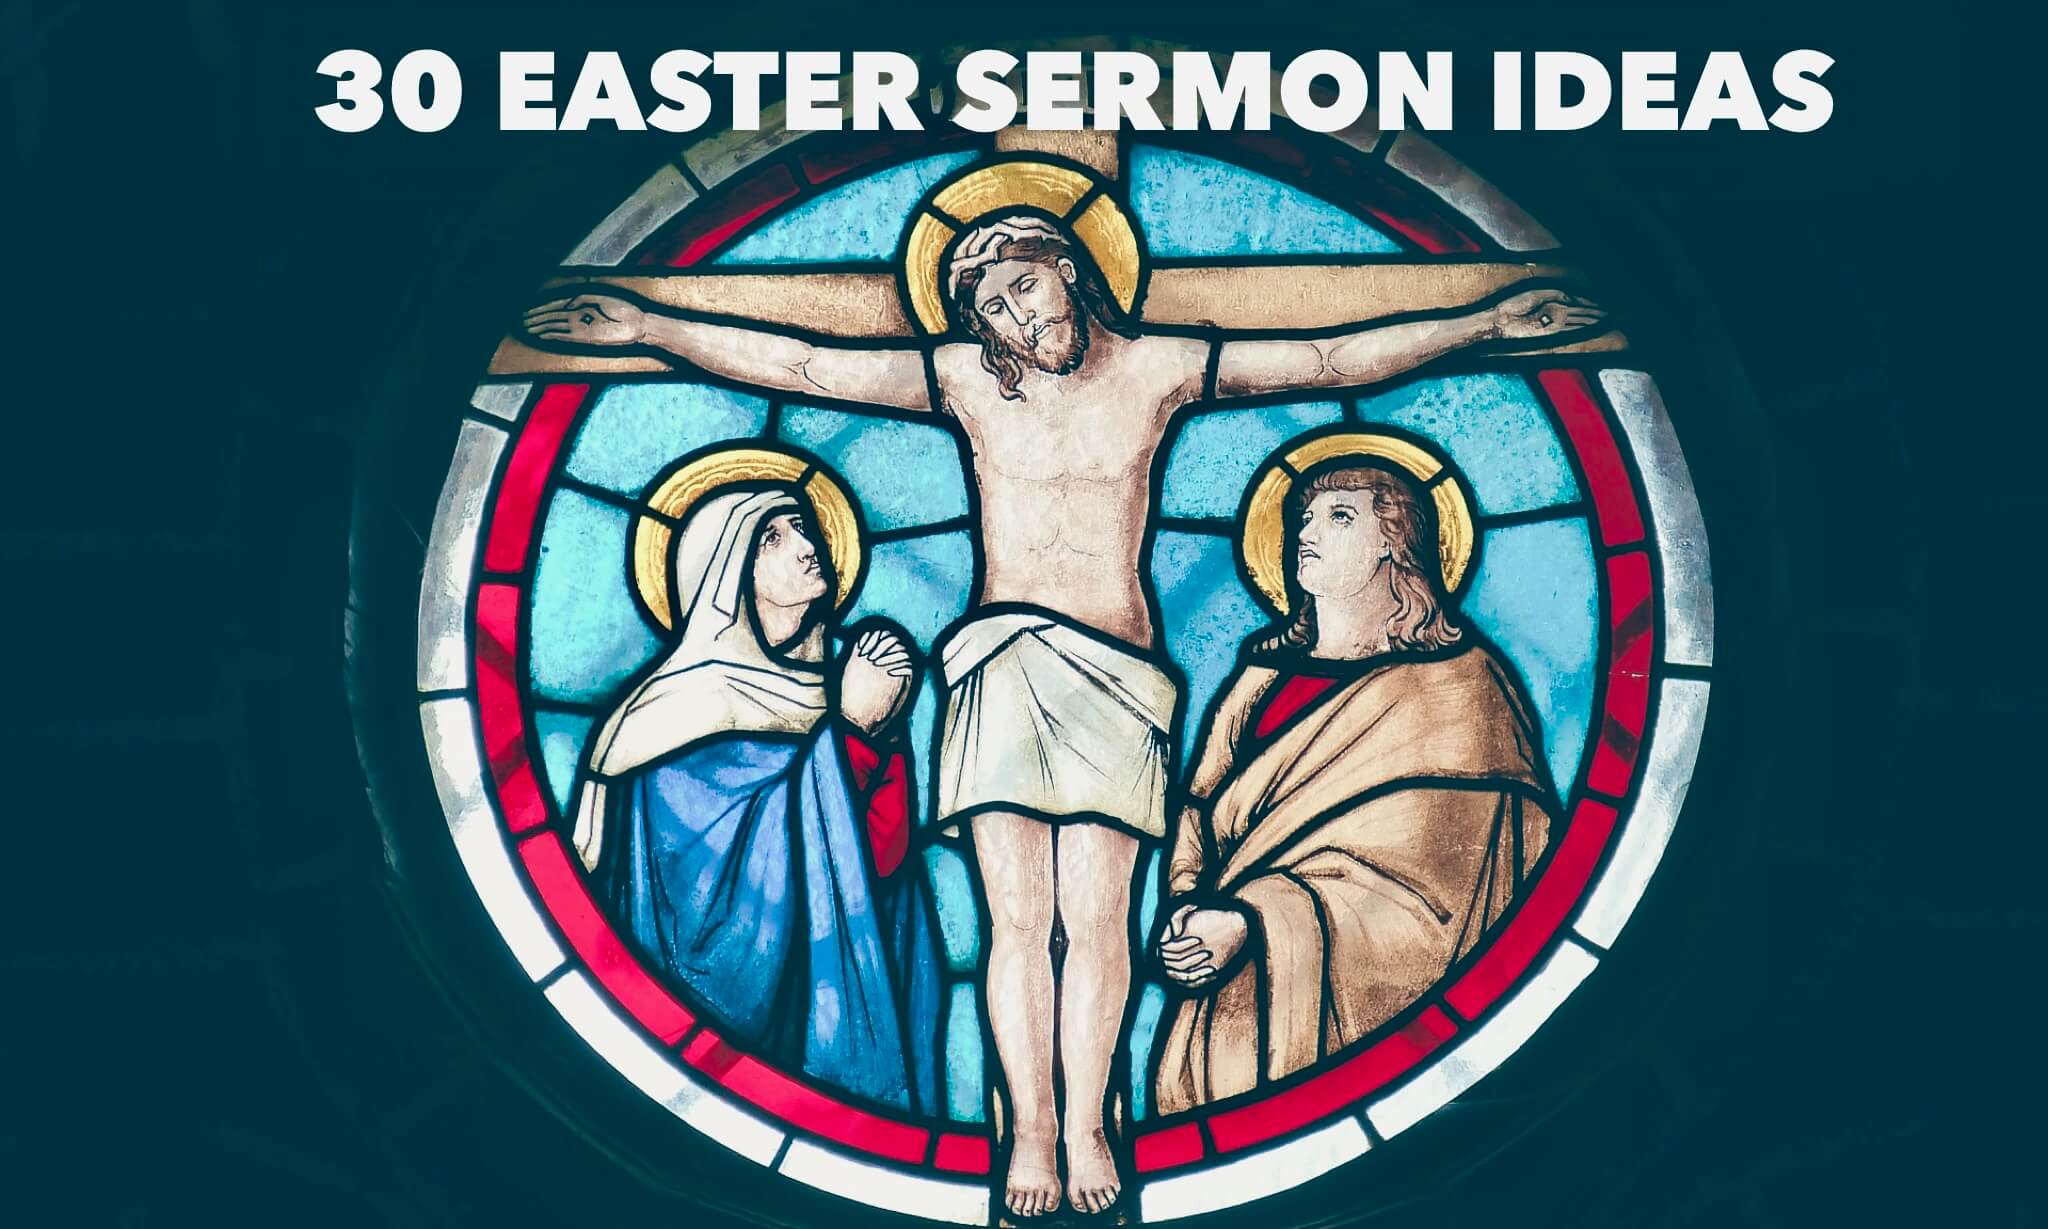 Easter sermon ideas